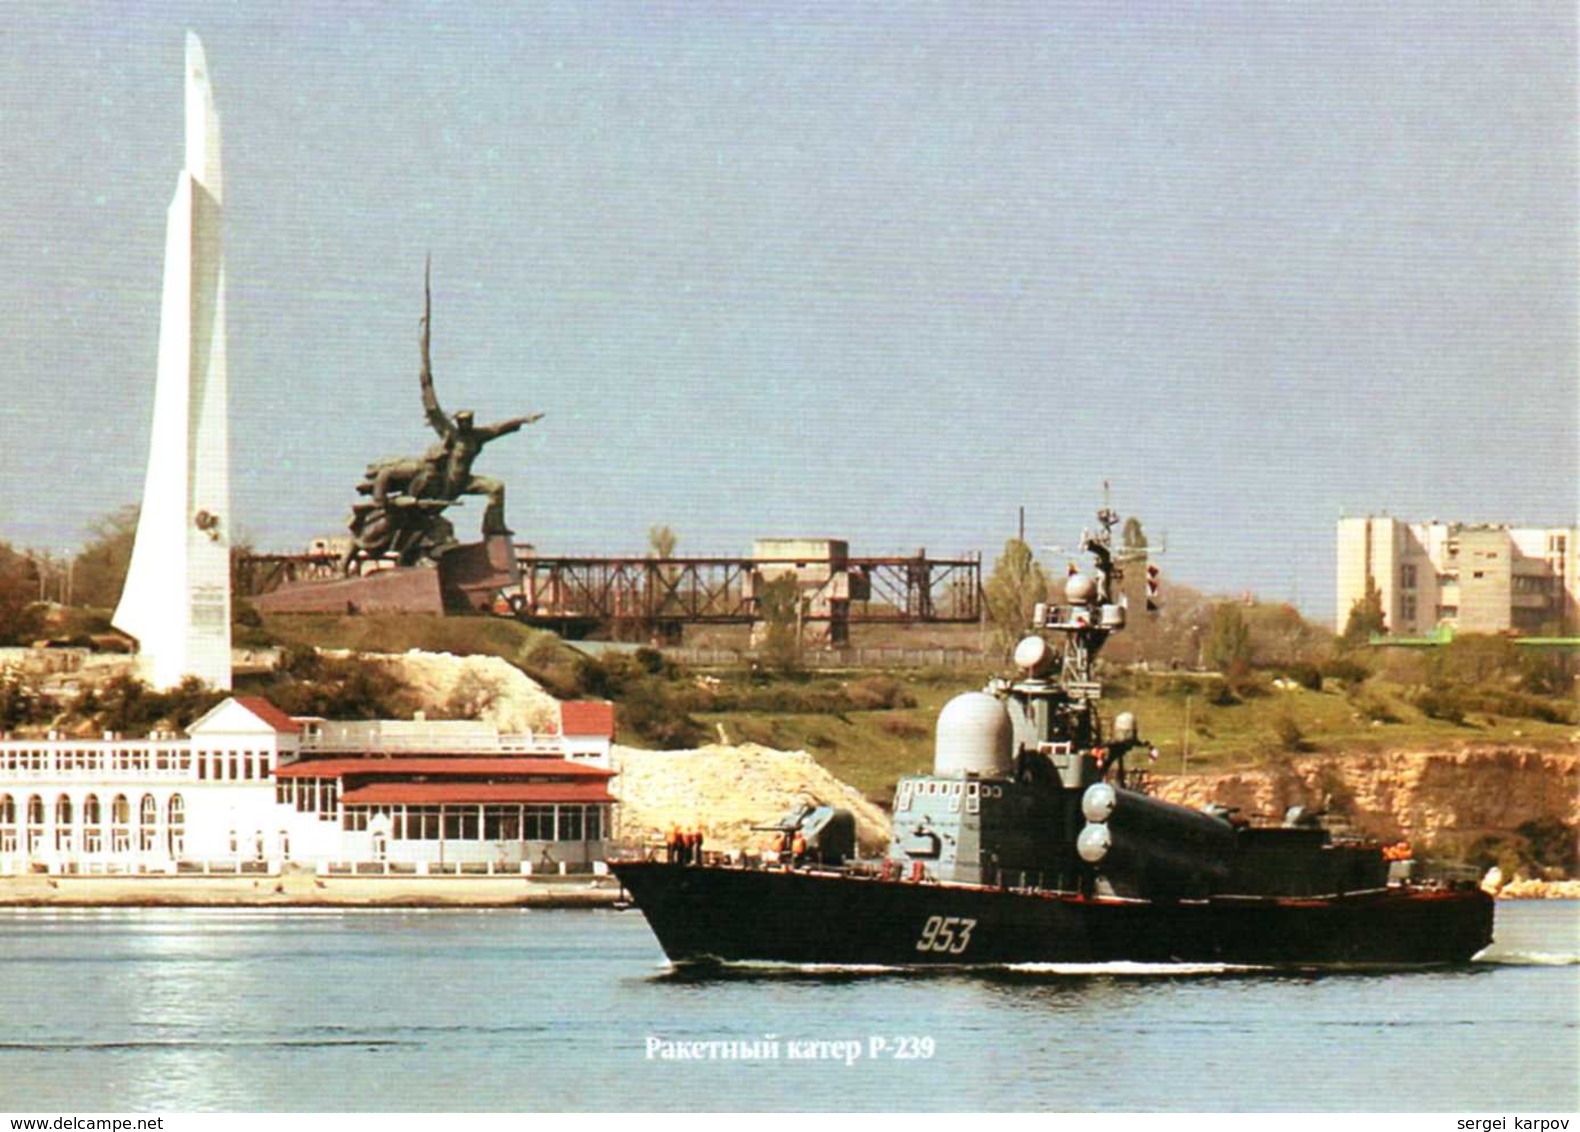 Russian Navy, part IV, 2014 (Russian Black Sea Fleet)